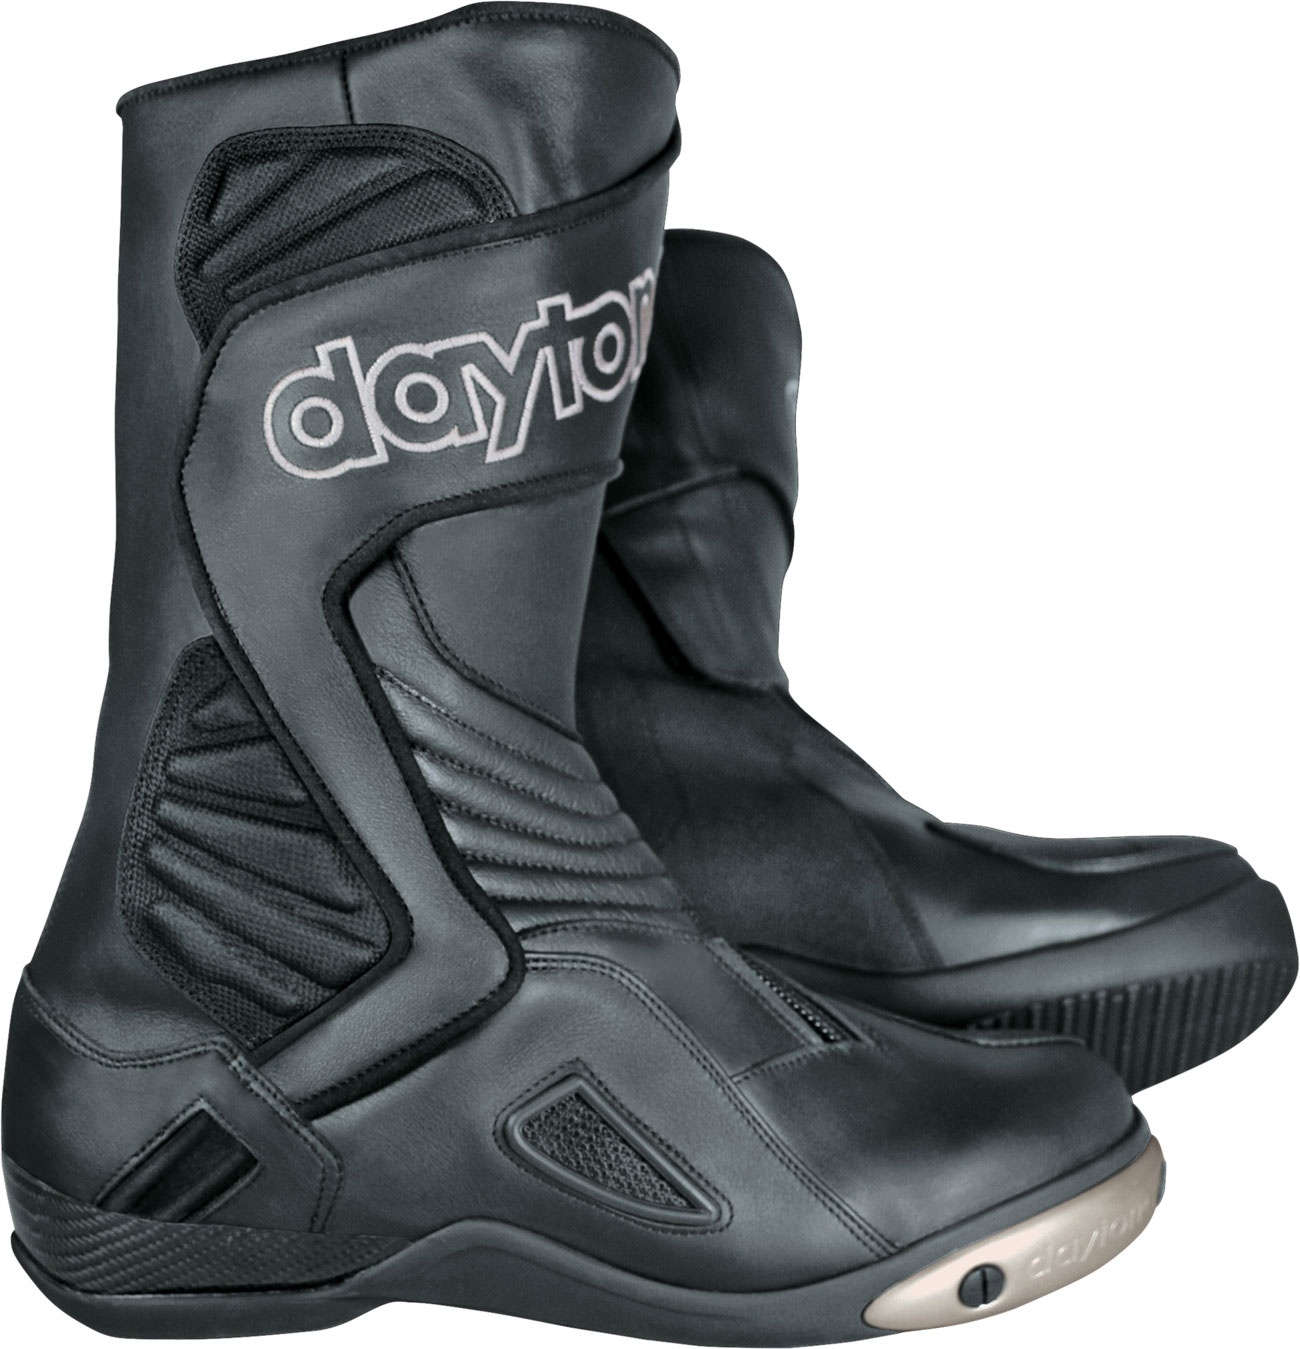 Daytona outer boots for EVO VOLTEX - Noir - 38